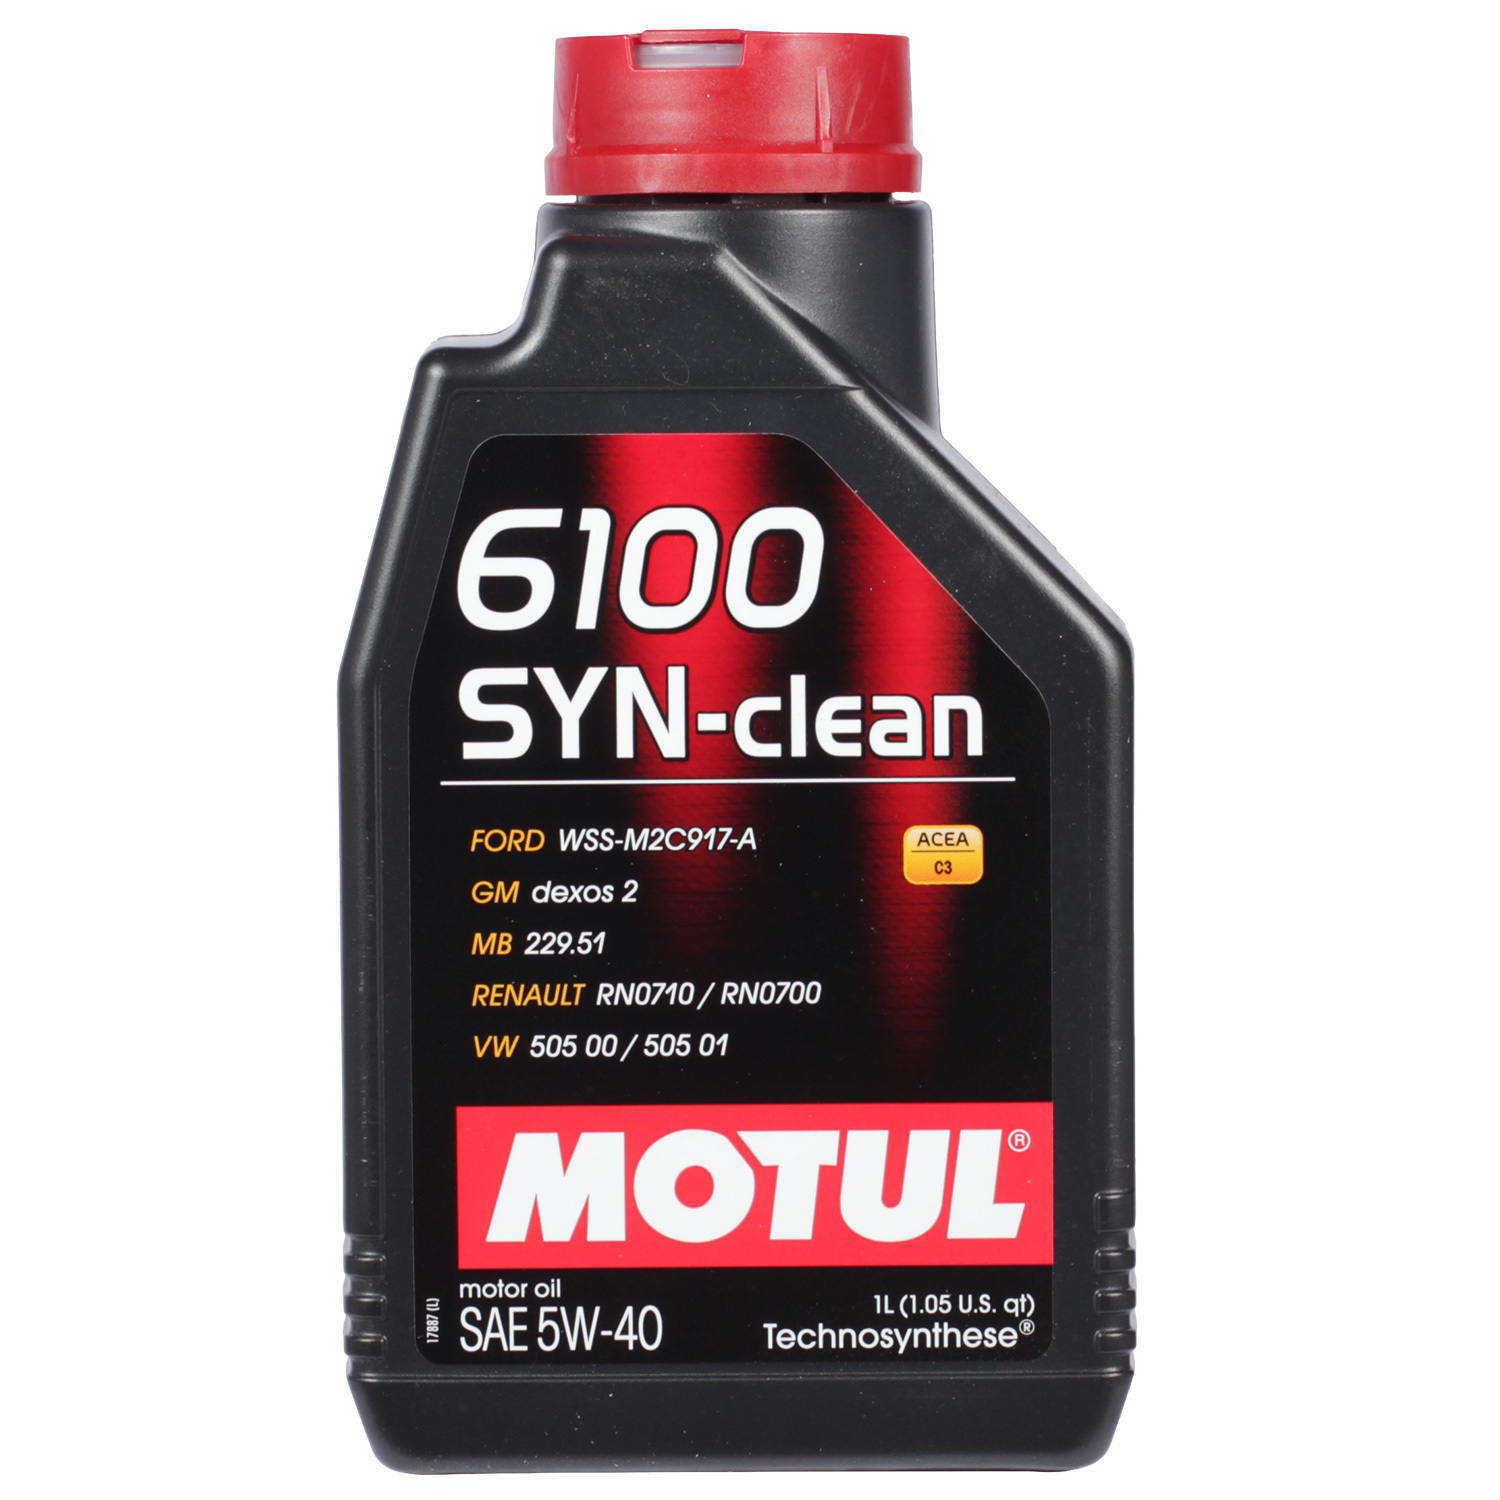 Motul Моторное масло Motul 6100 SYN-CLEAN 5W-40, 1 л motul моторное масло motul 6100 save lite 5w 30 1 л